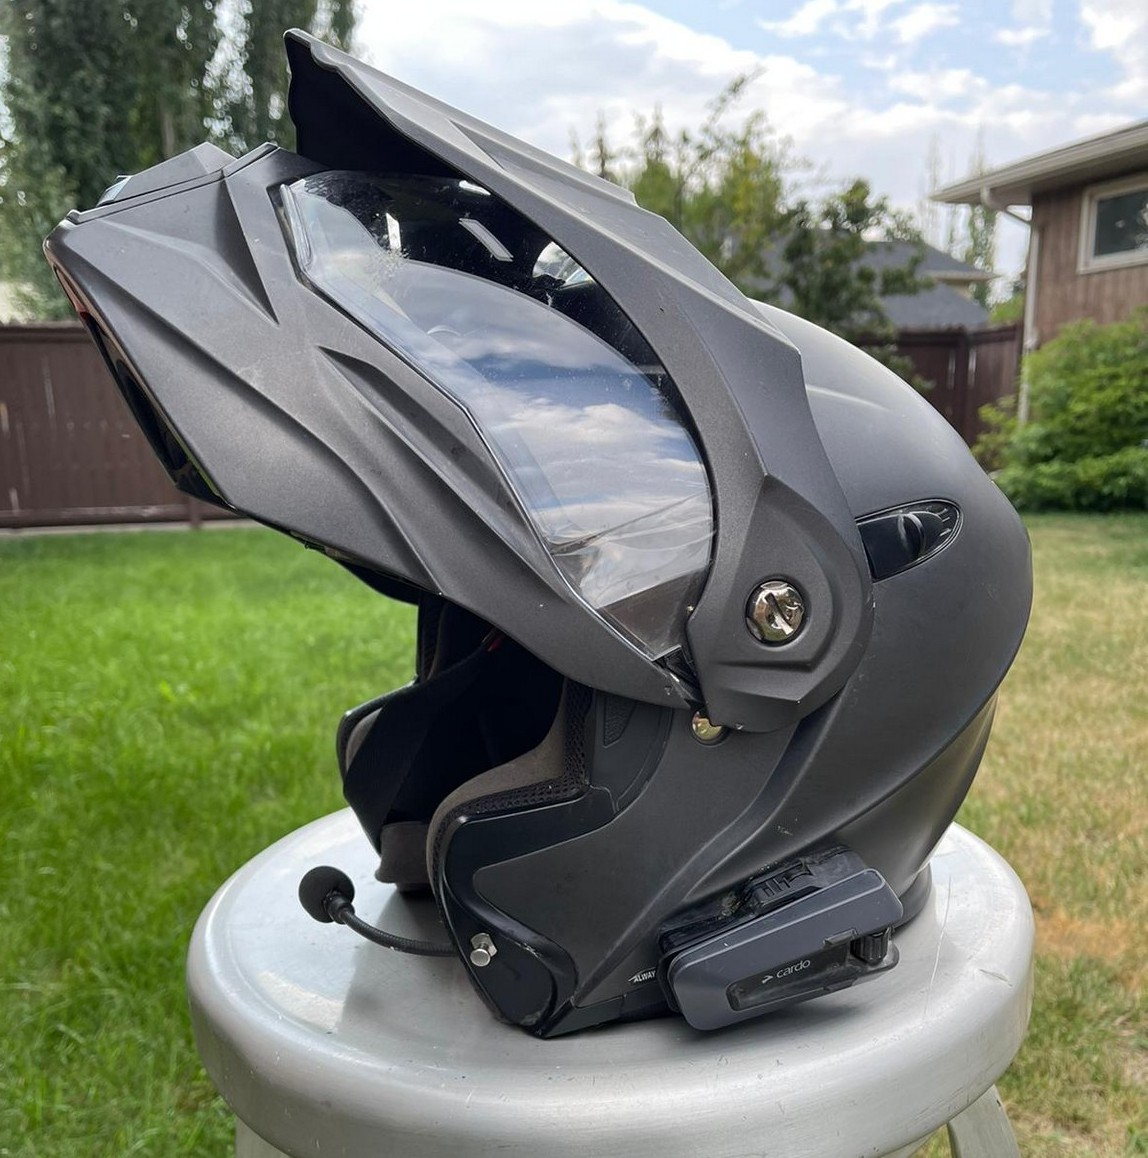 The Cardo PT Edge installed in Greg’s Scorpion AT950 helmet.